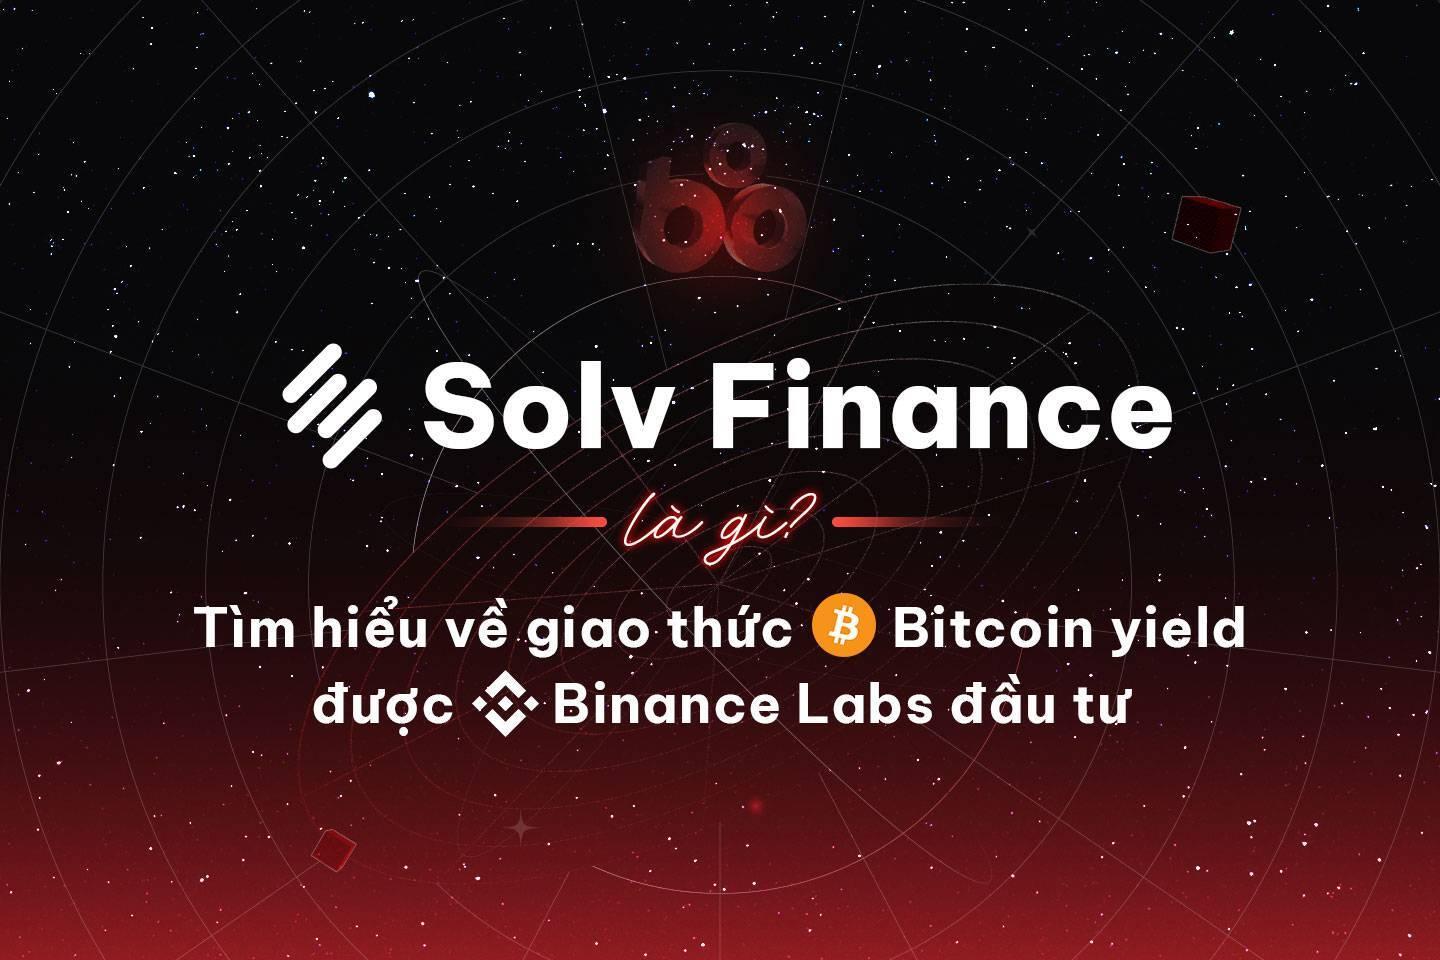 solv-finance-la-gi-tim-hieu-ve-giao-thuc-yield-cua-bitcoin-duoc-binance-labs-dau-tu